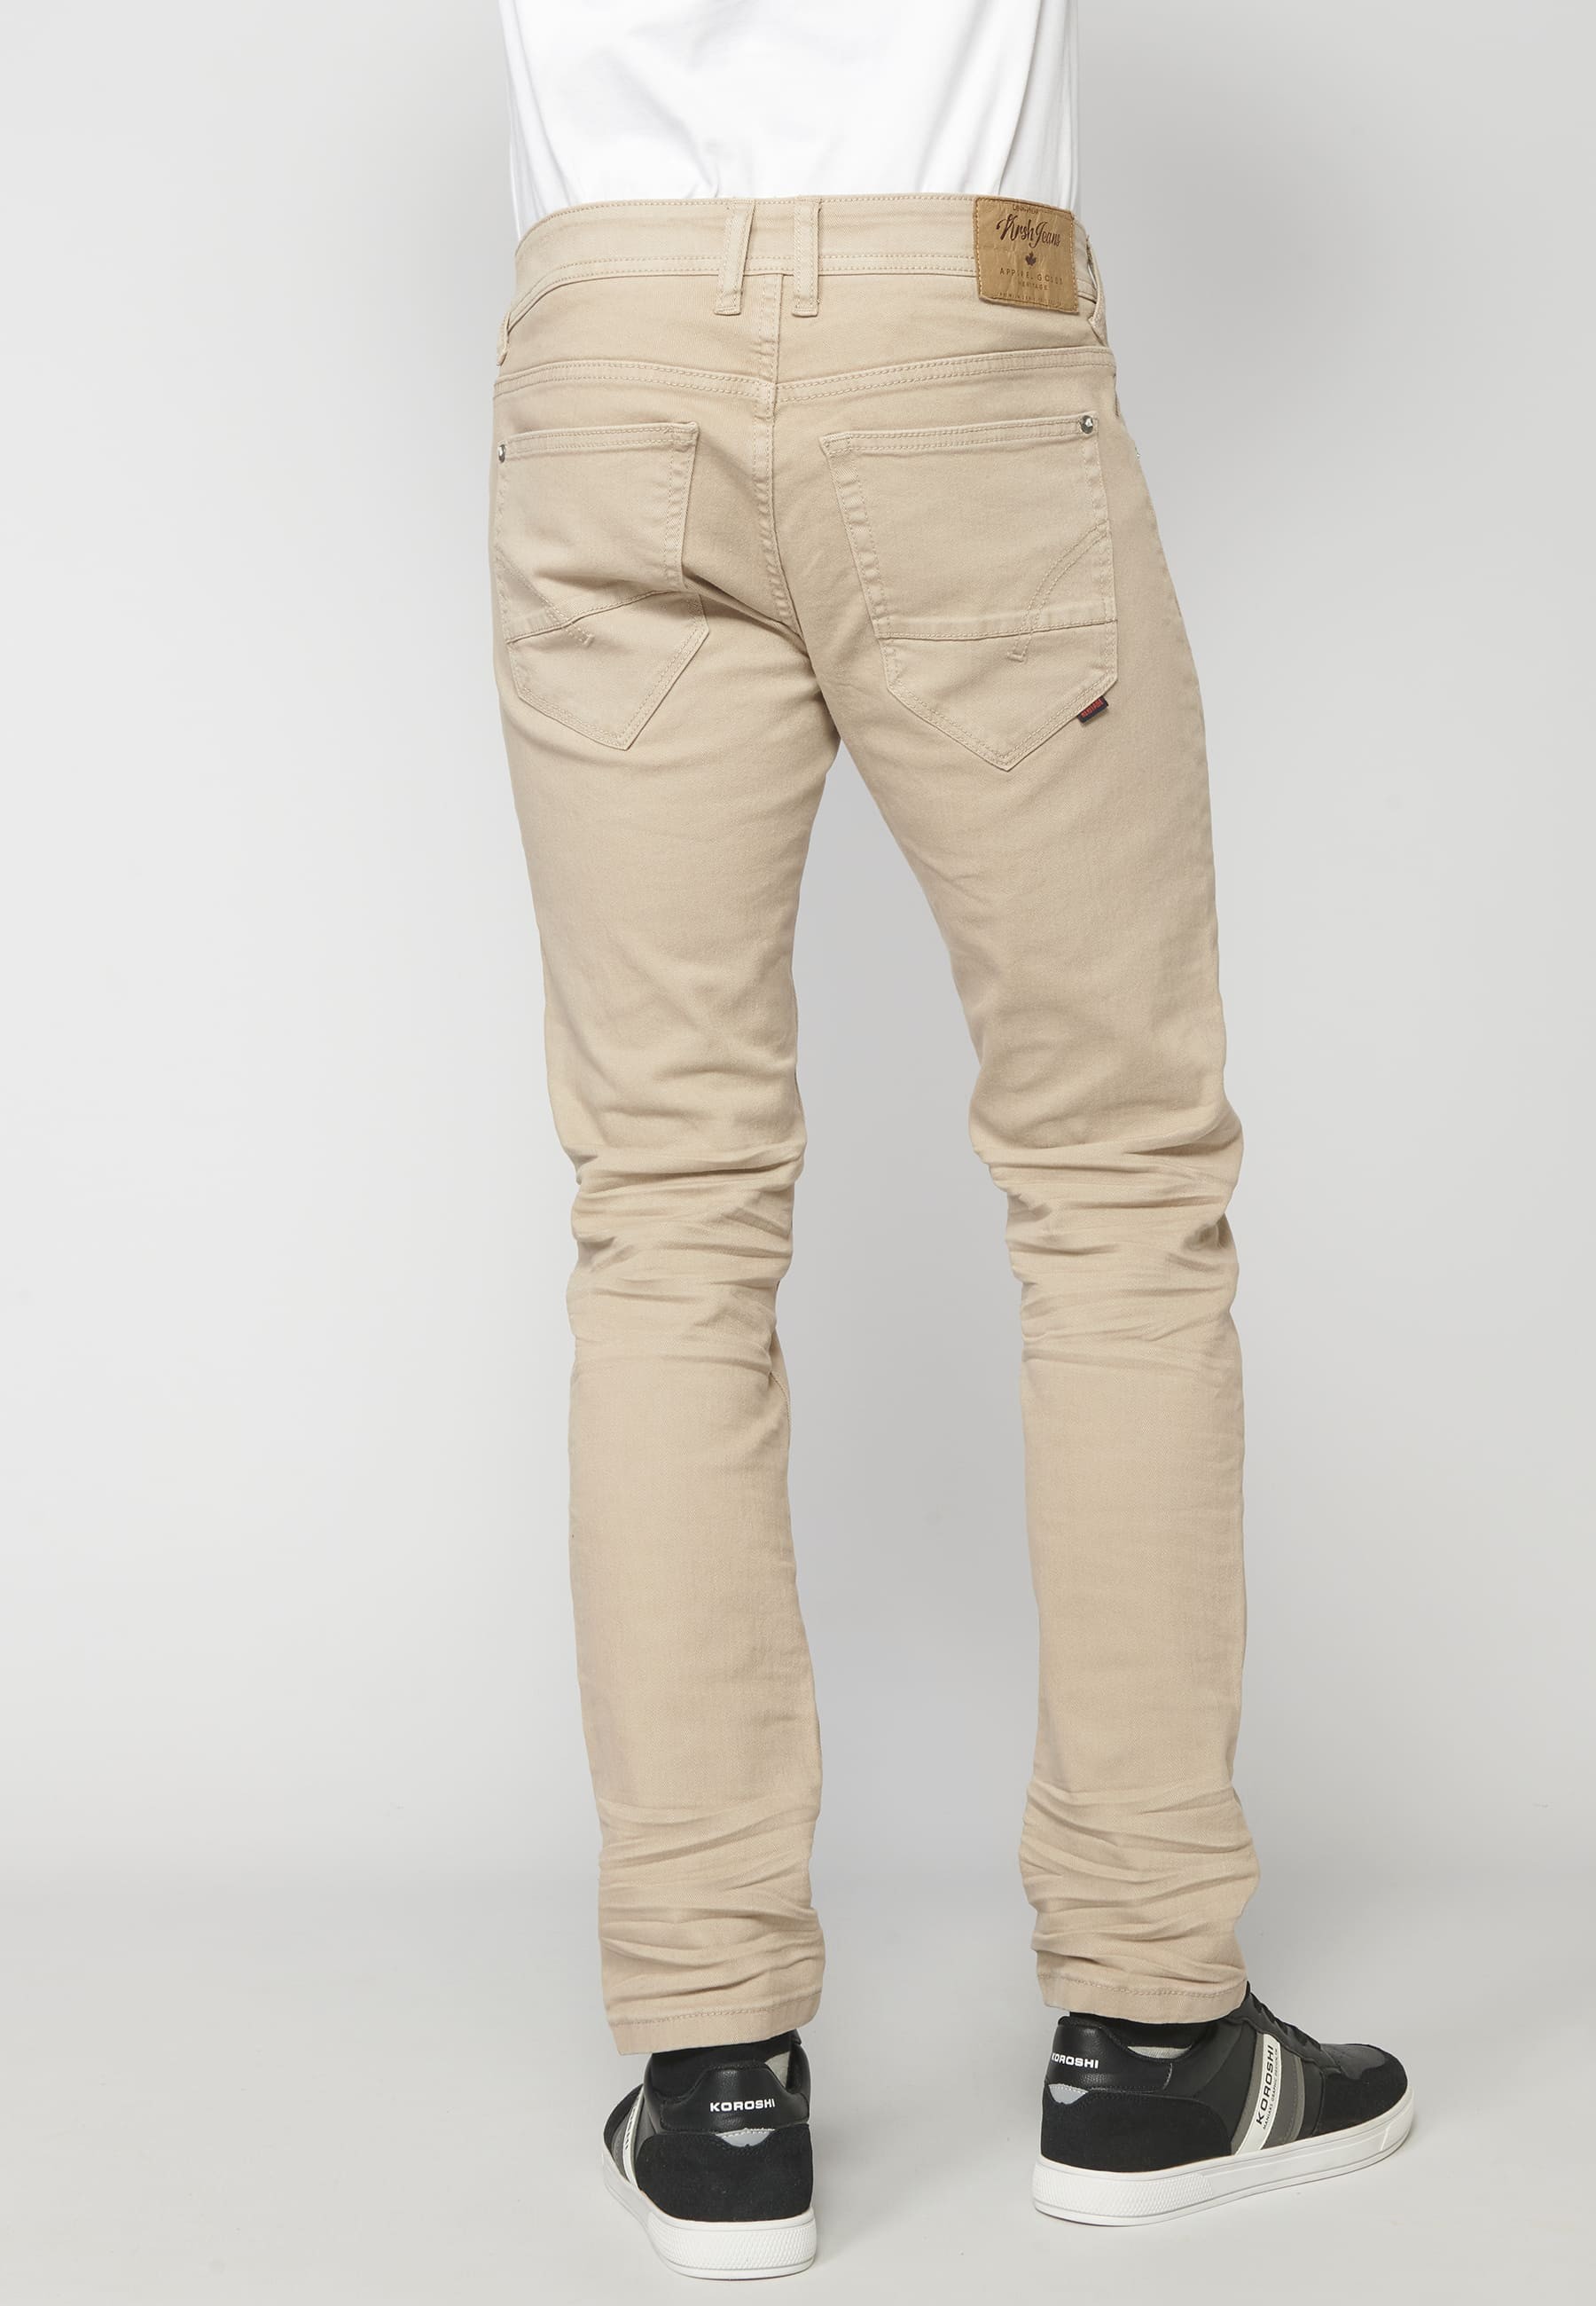 Colored Stretch Regular Fit Jeans for Men